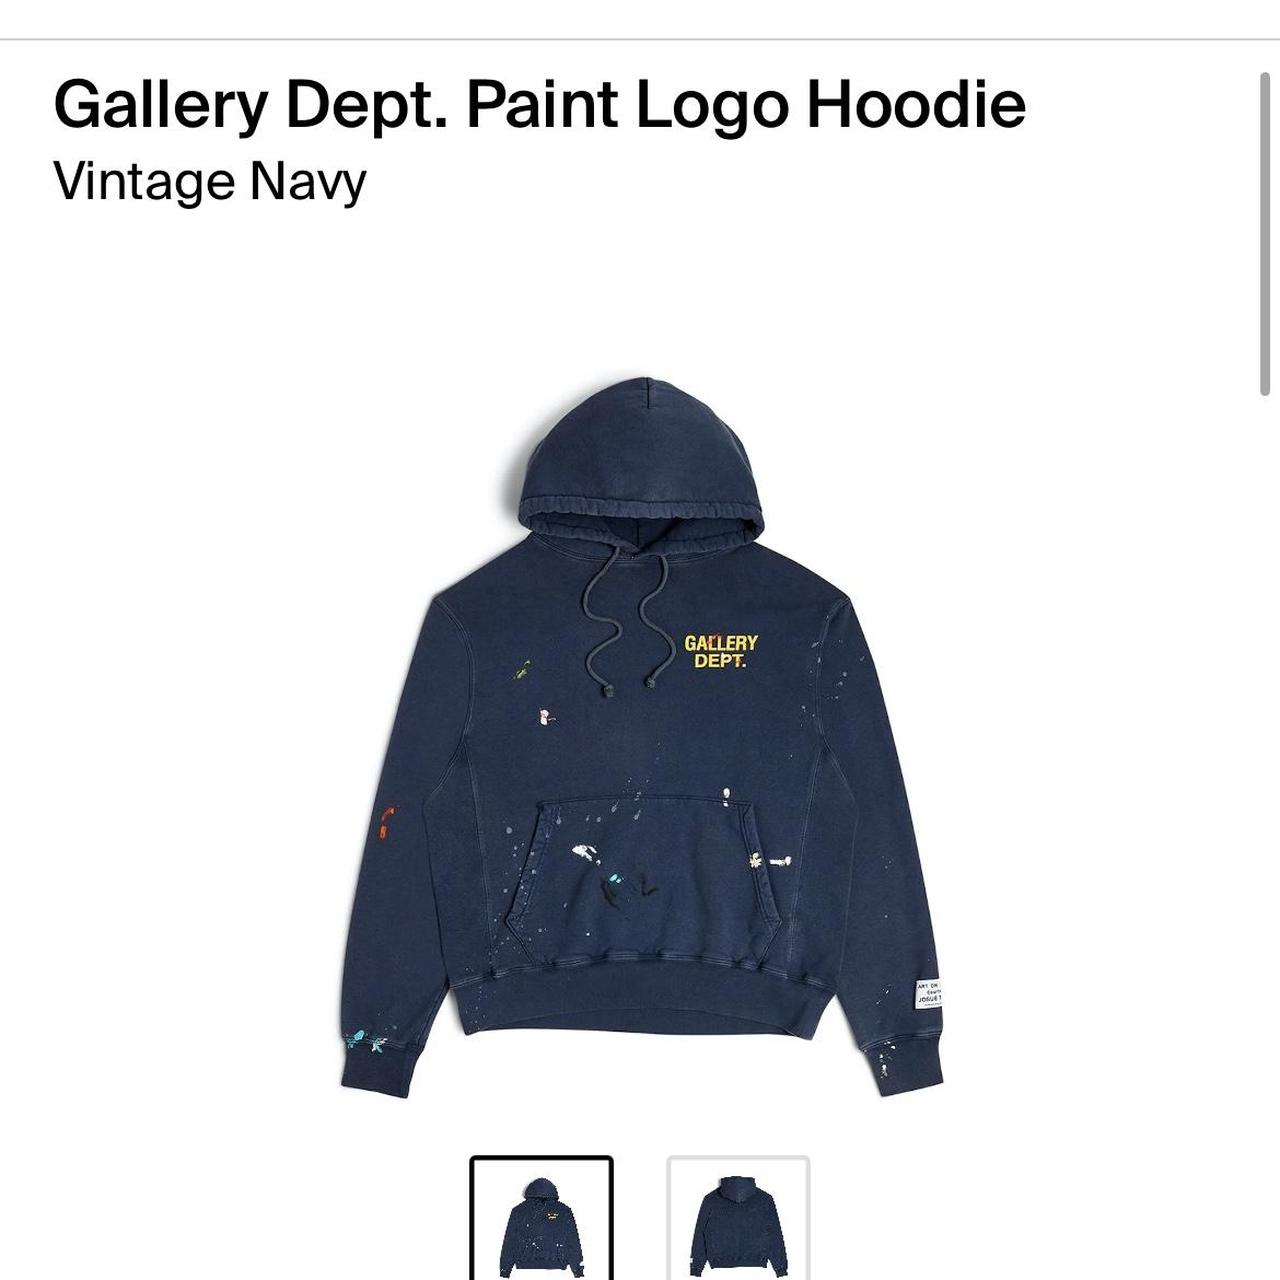 73cm 袖丈GALLERY DEPT． Paint Logo Hoodie Navy - パーカー